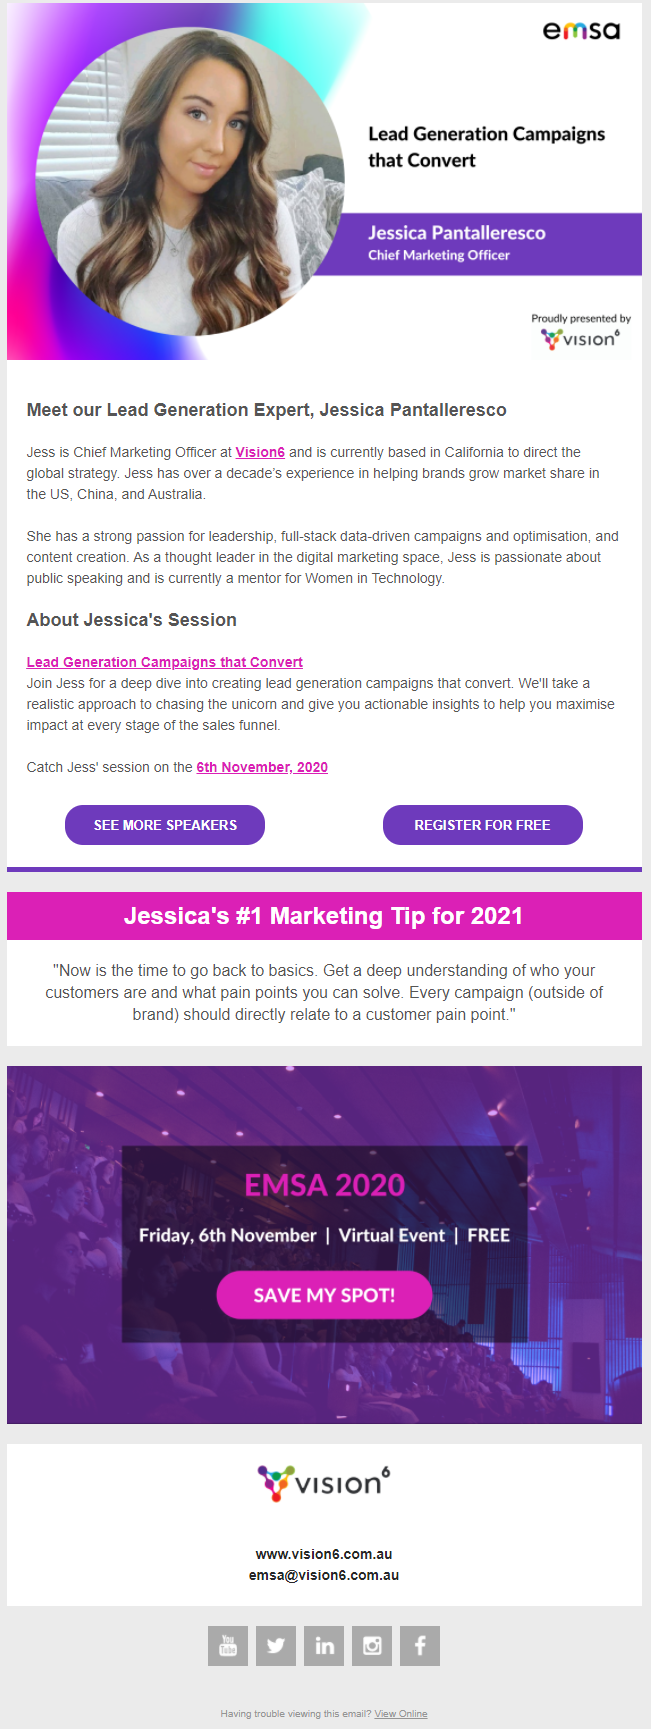 Email Marketing Summit Australia (EMSA)